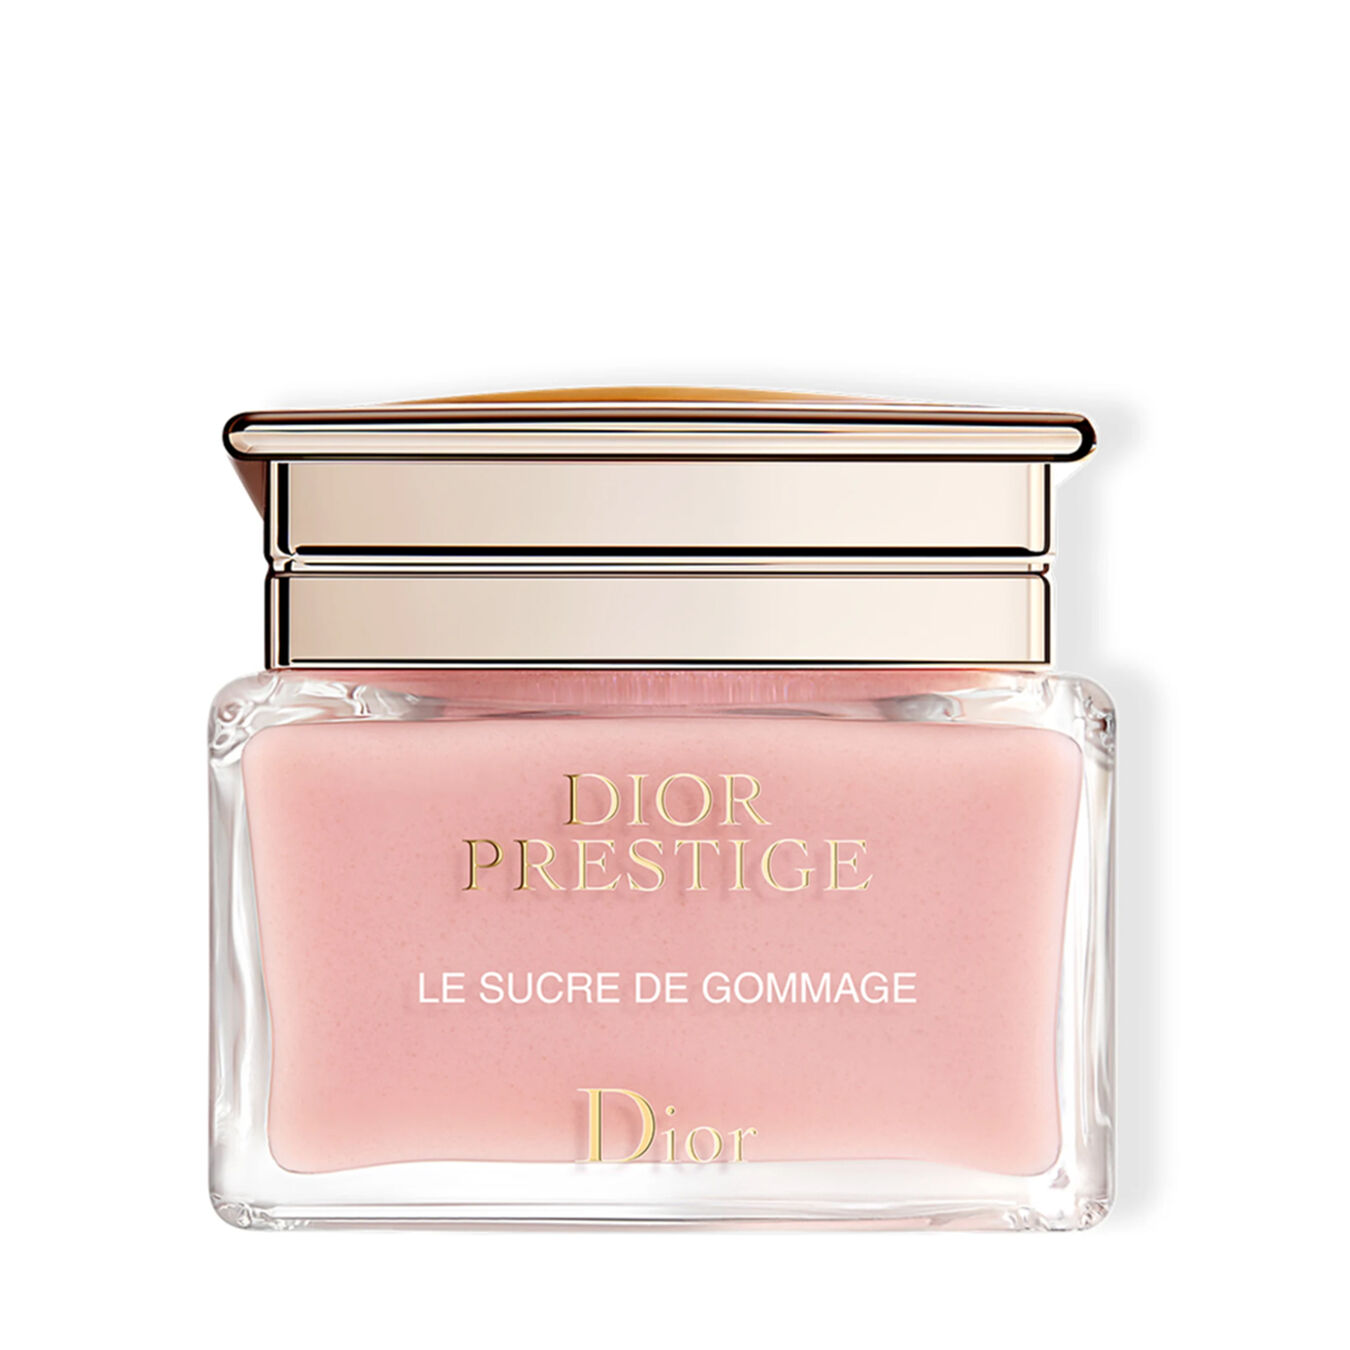 DIOR DIOR Prestige Le Sucre De Gommage von Dior